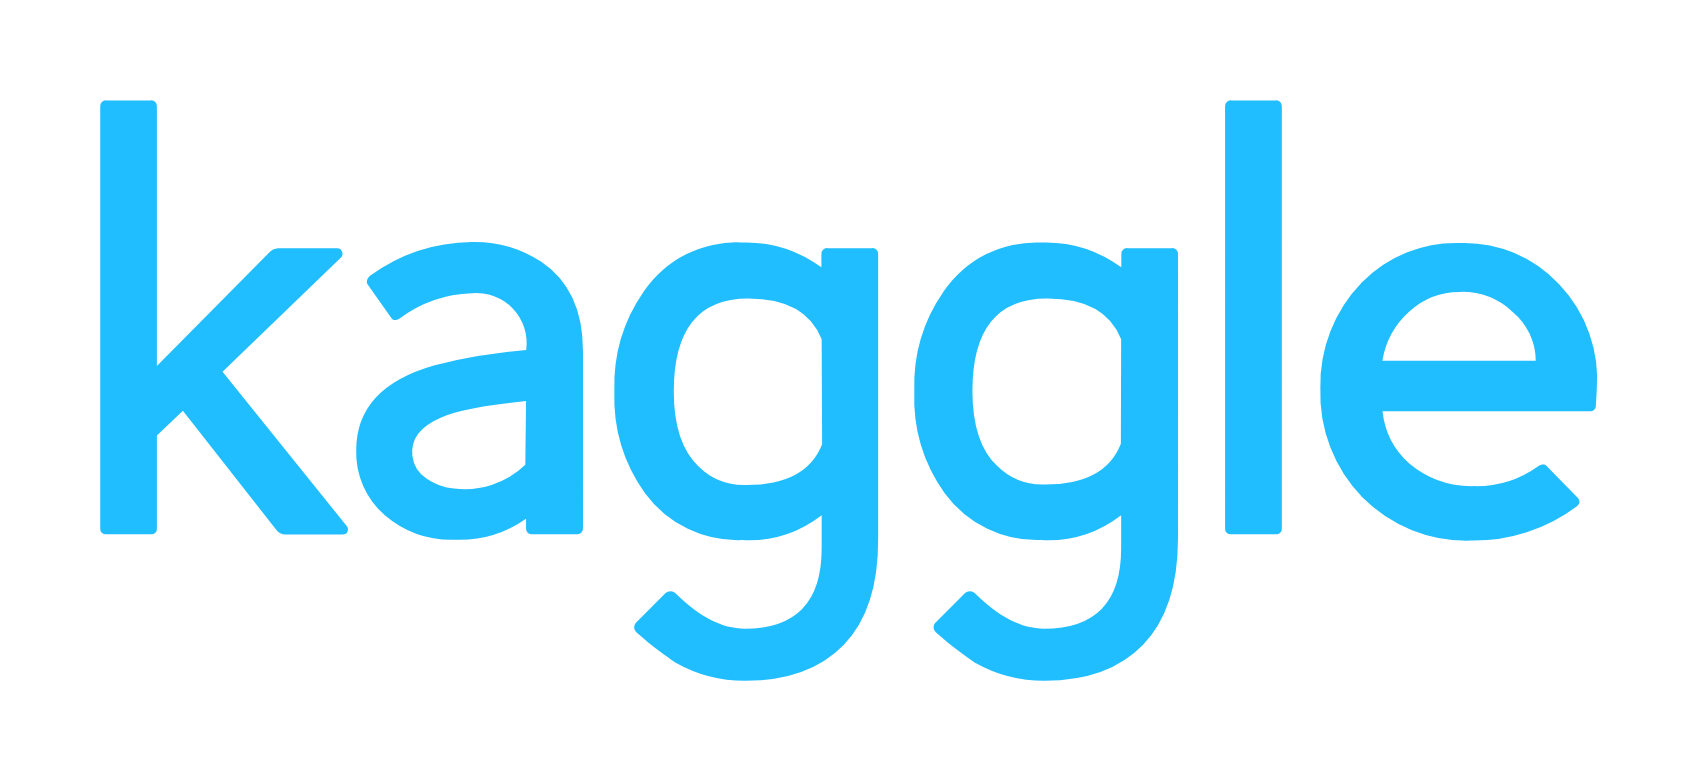 Kaggle